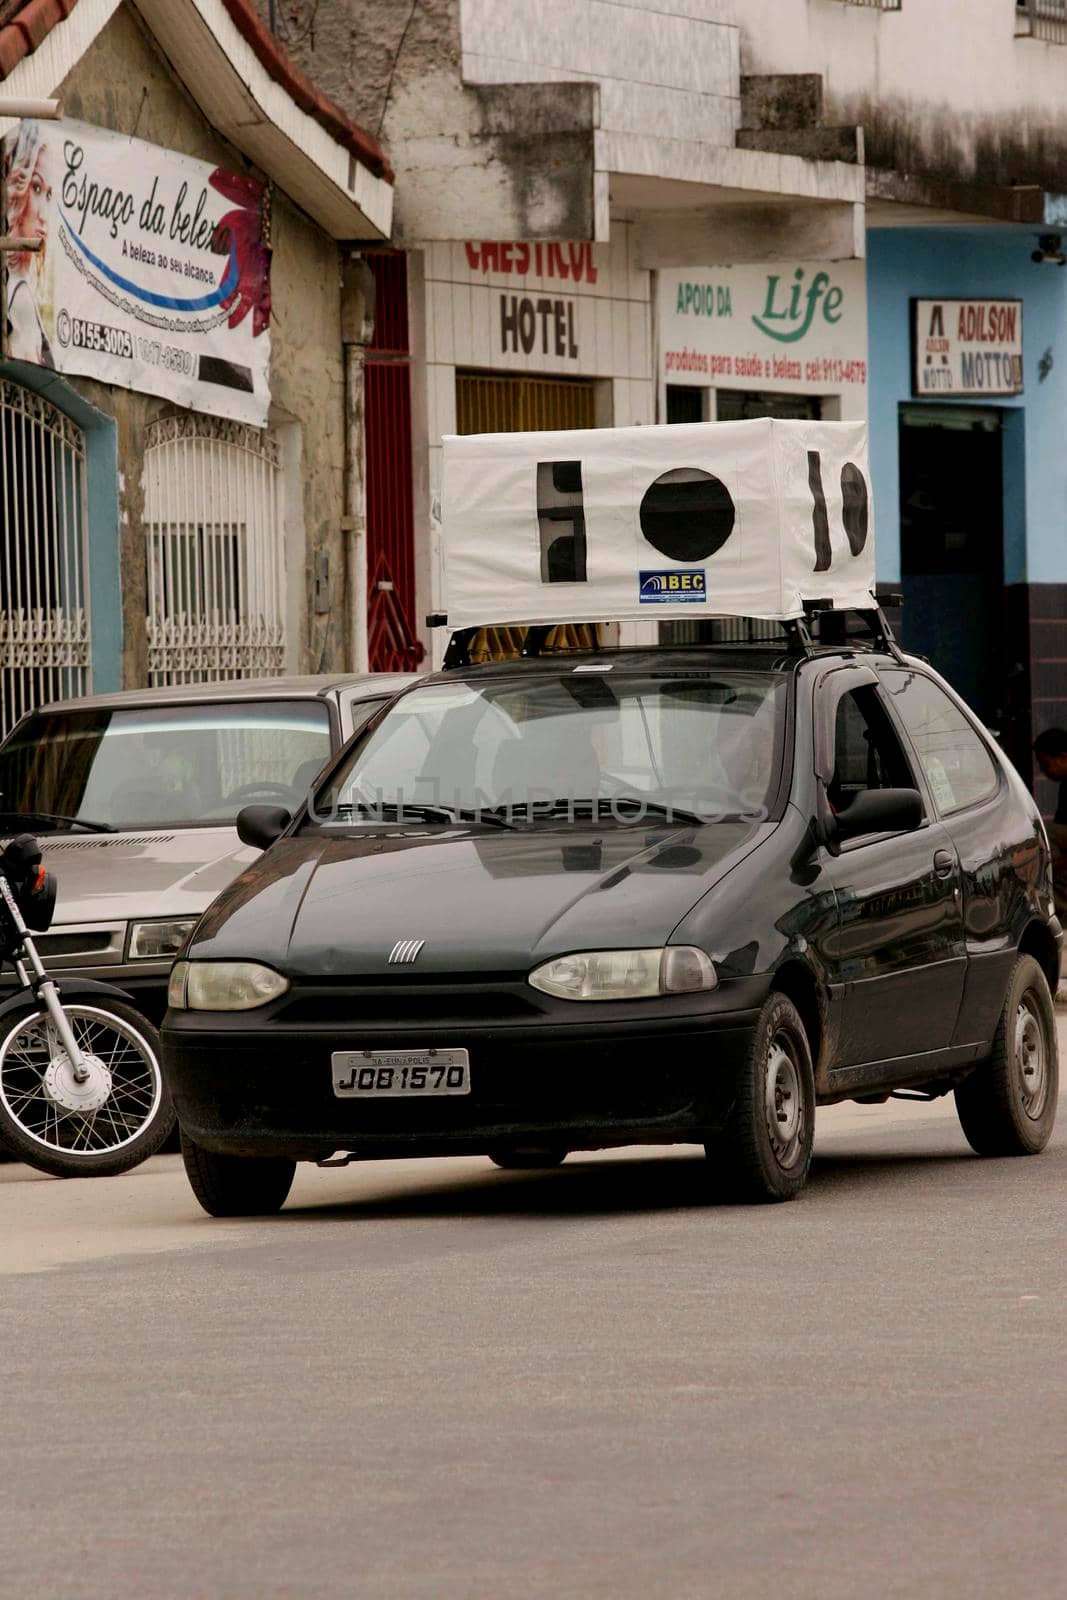 eunapolis, bahia / brazil - agosto 29, 2009: vehicle used to advertise sound is seen in the city of Eunapolis.